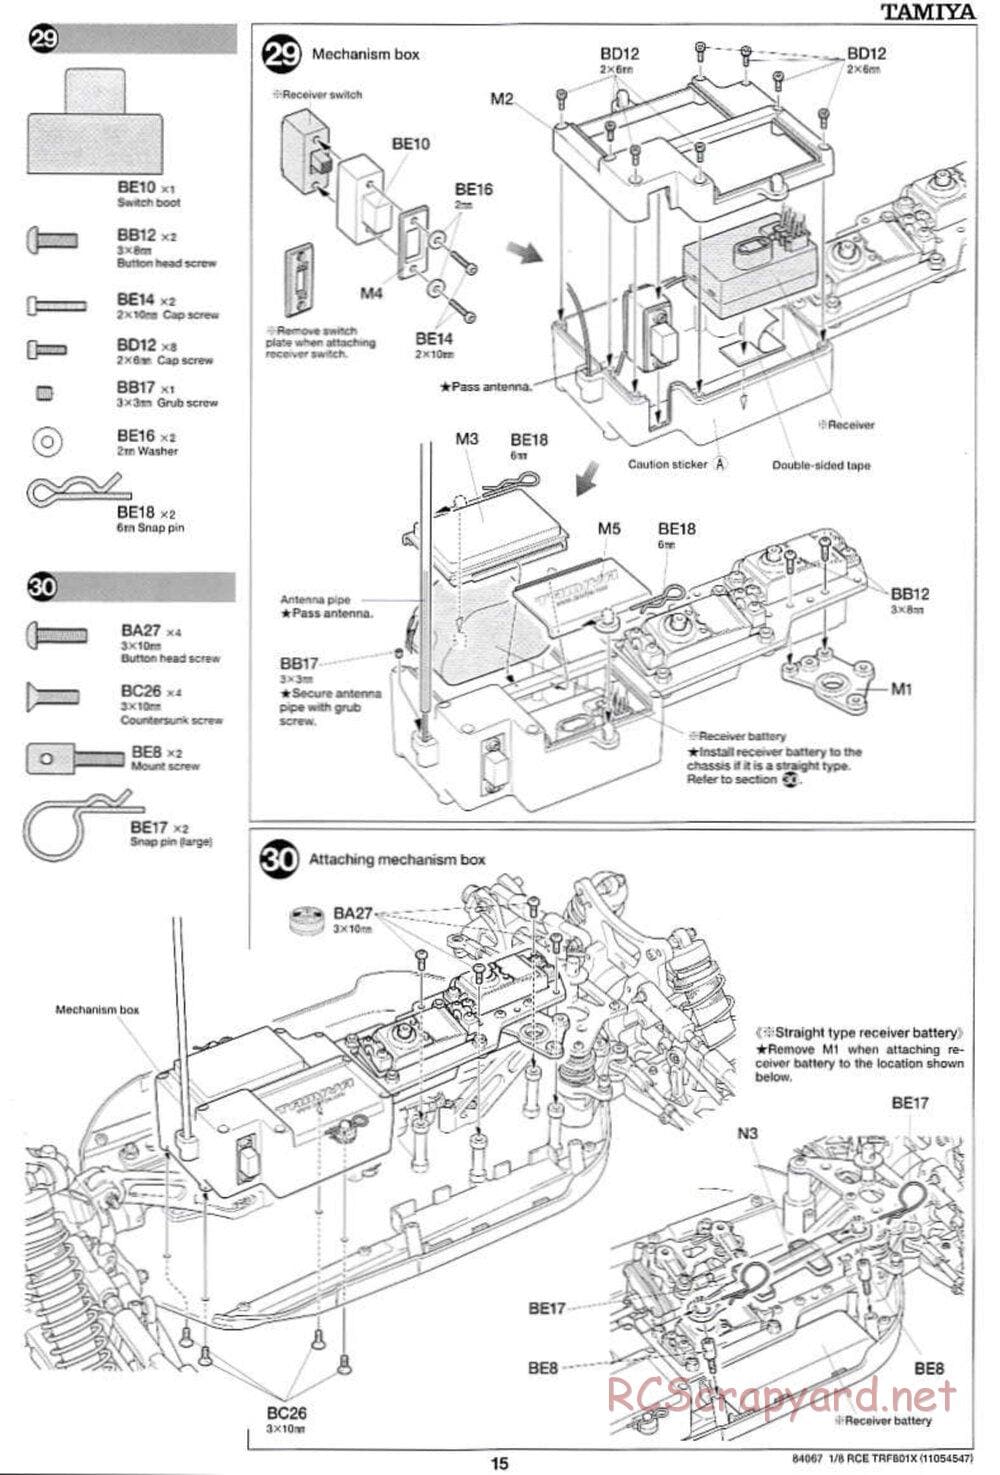 Tamiya - TRF801X Chassis - Manual - Page 15